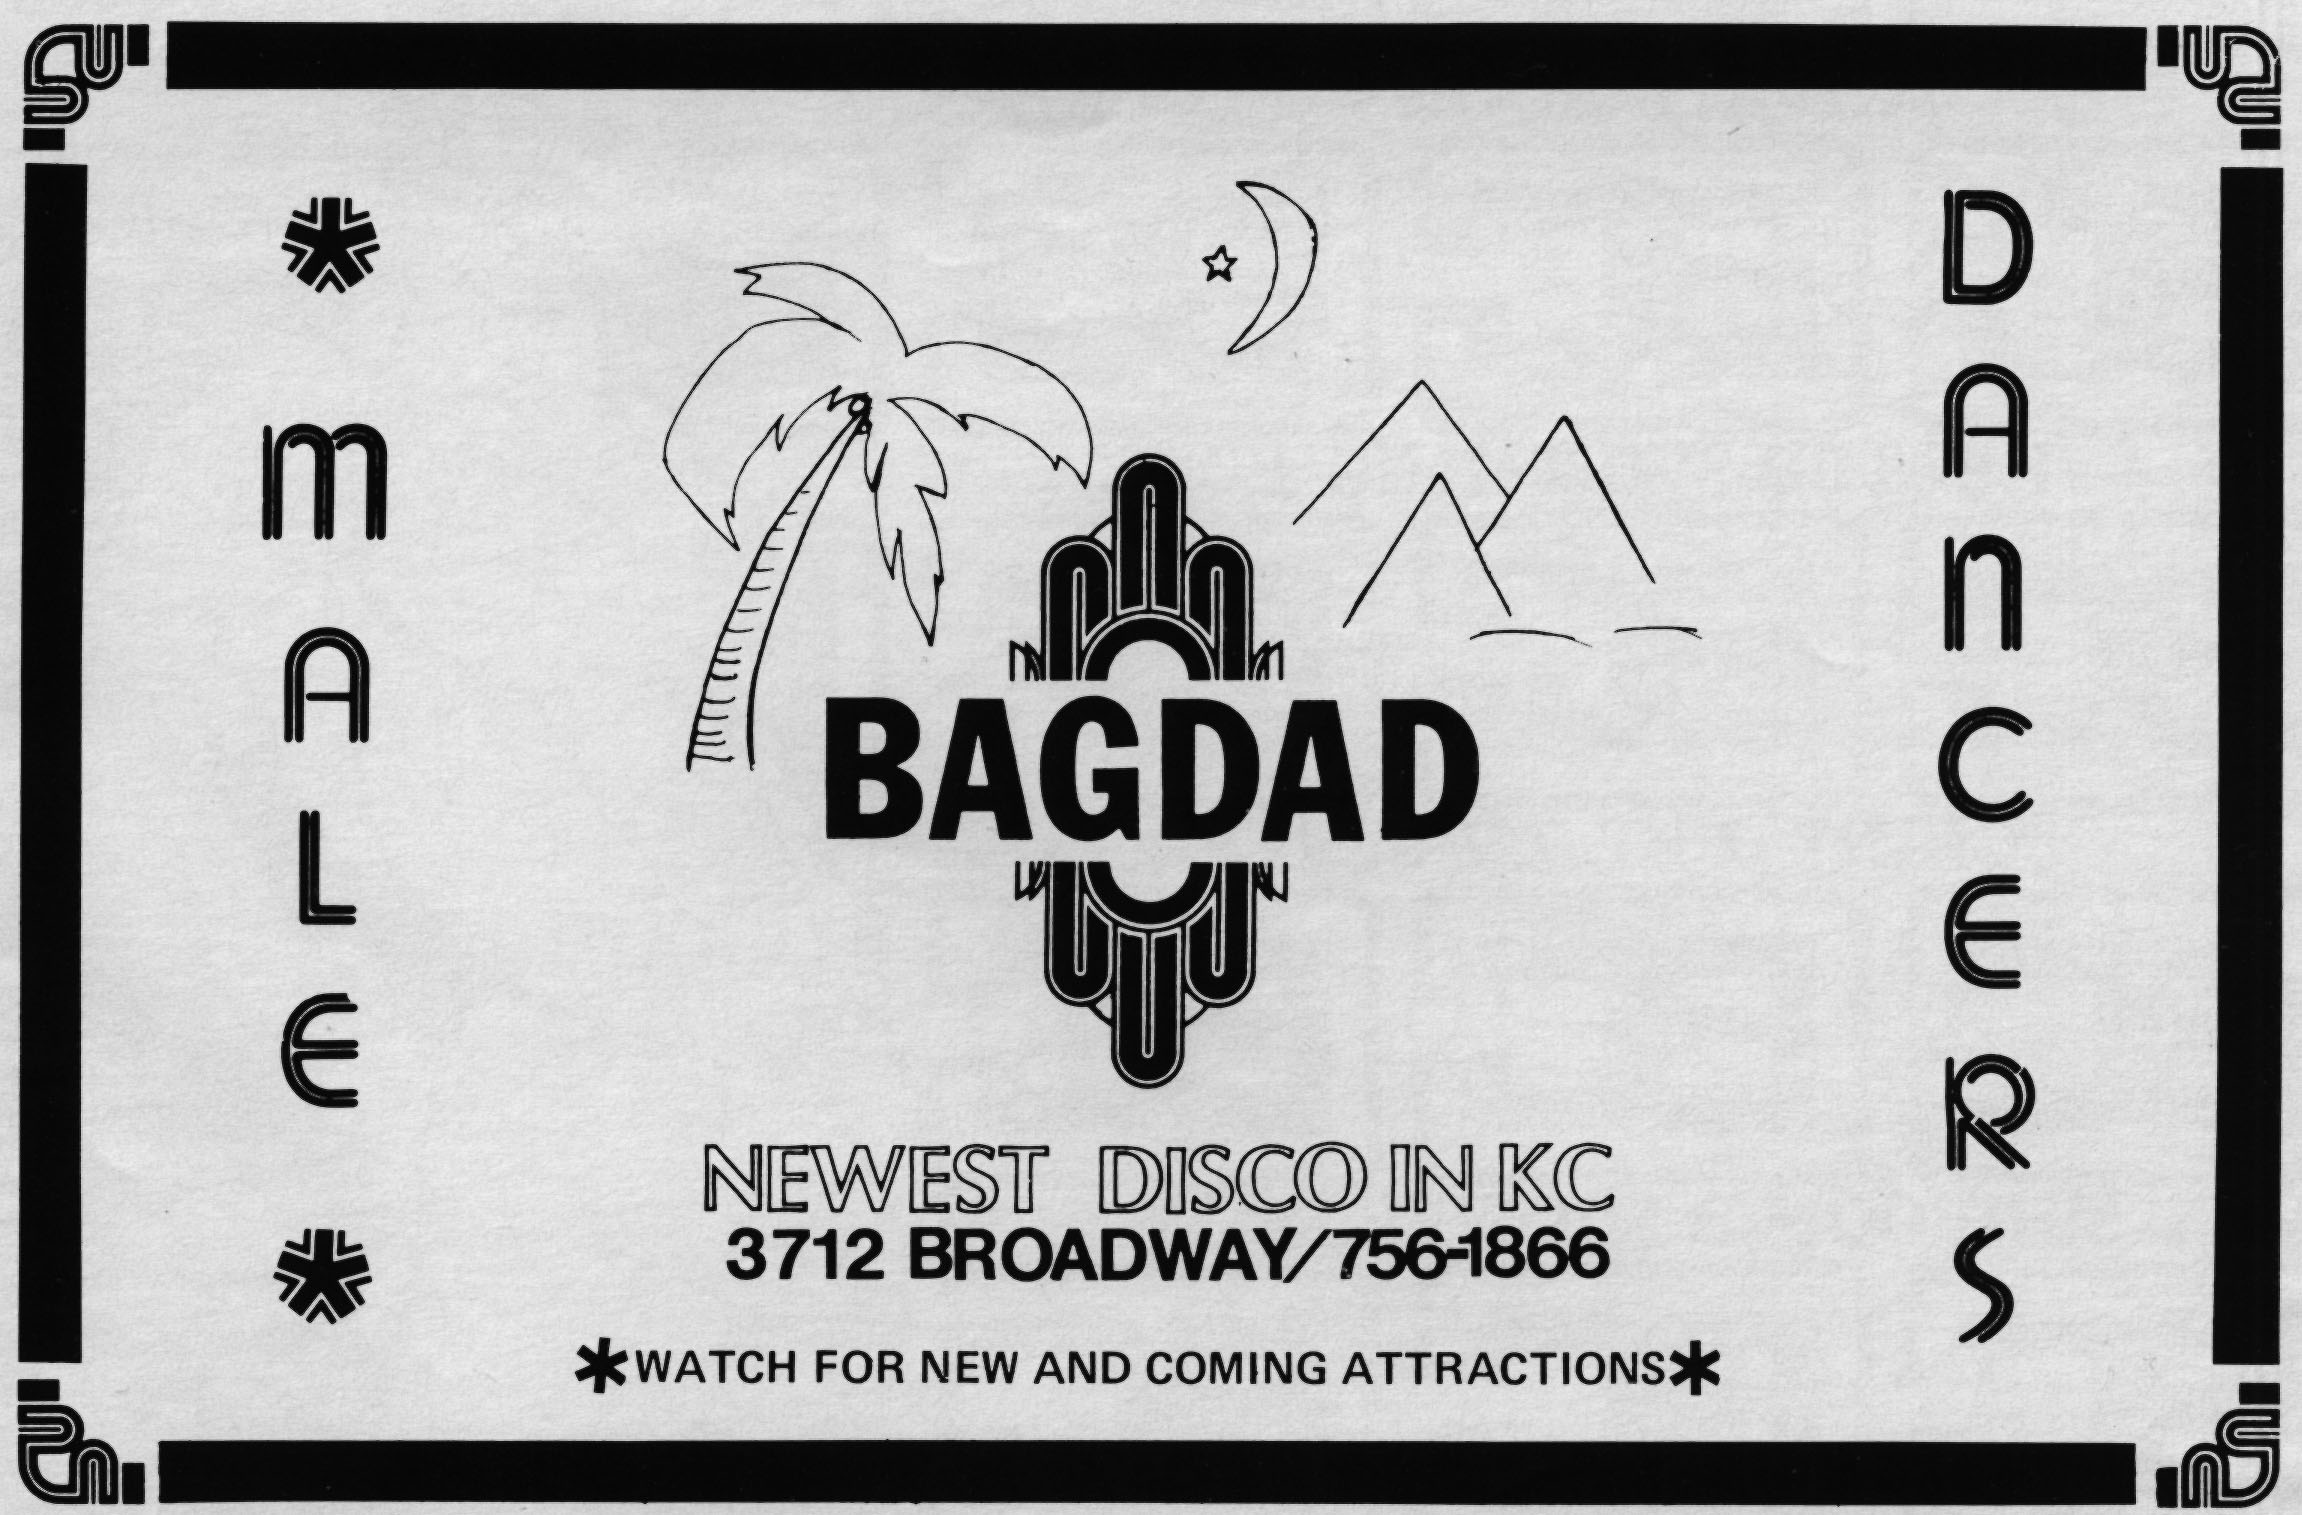 Bagdad logo/ad